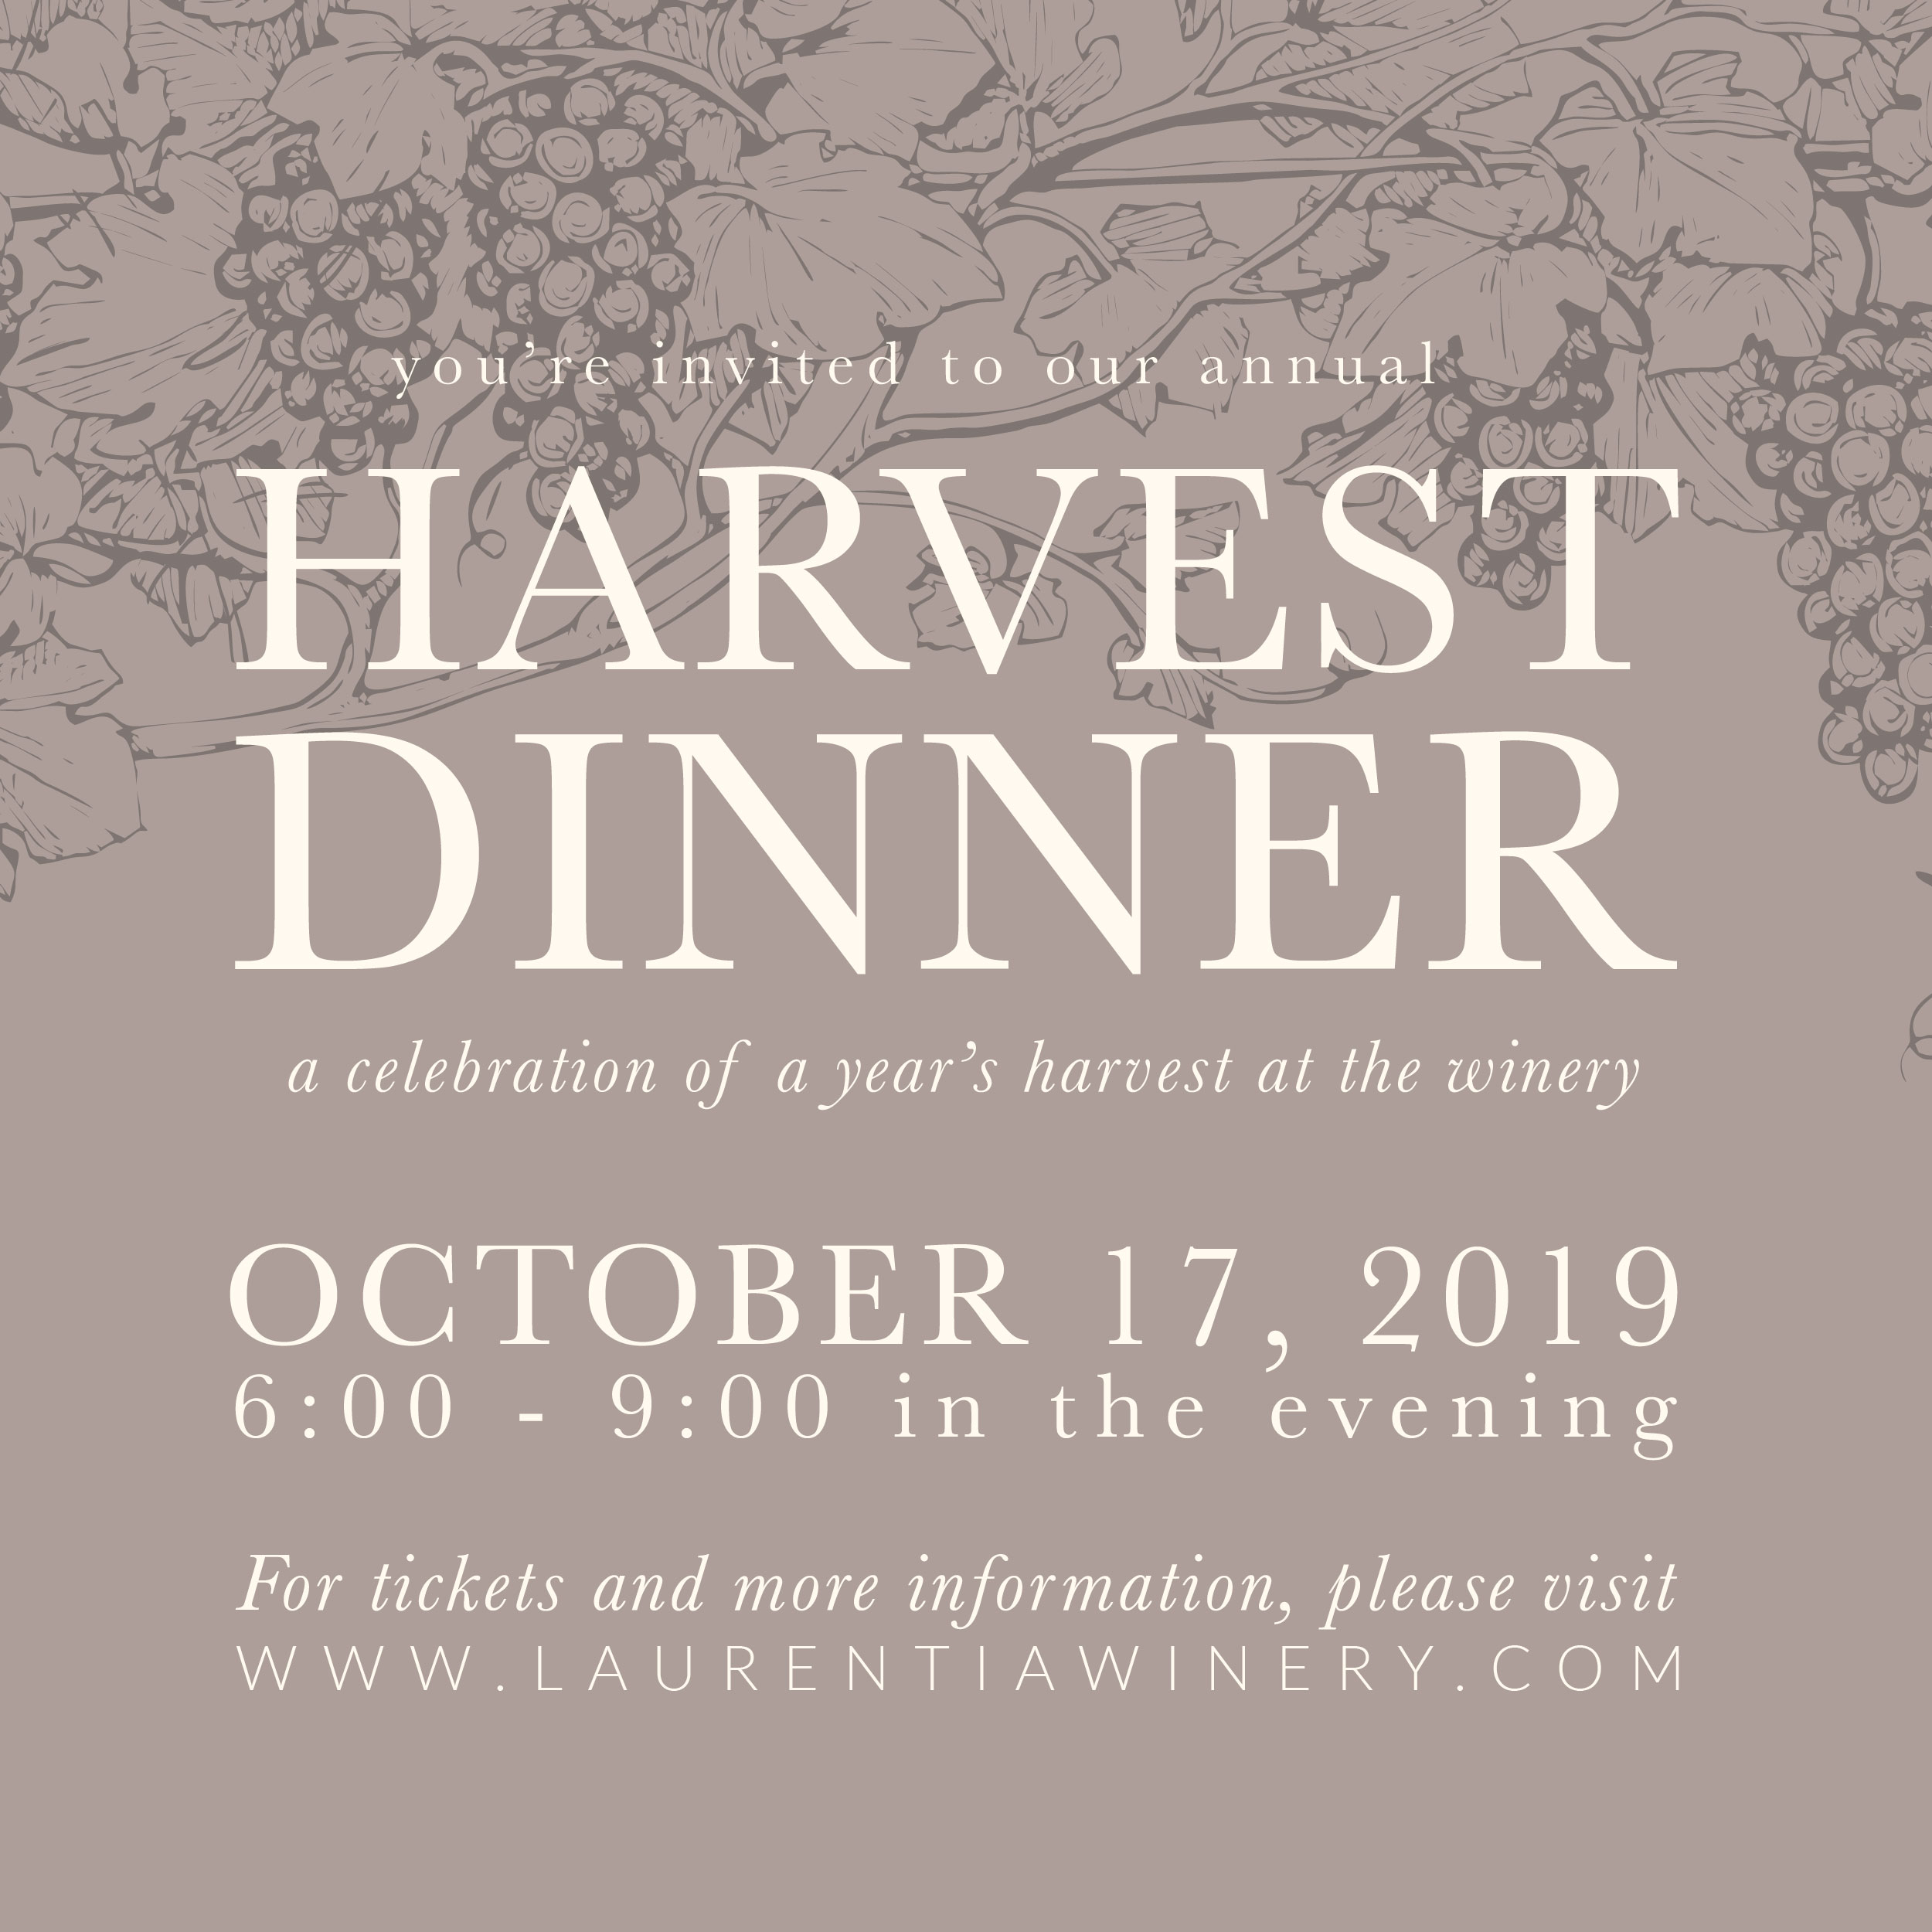 Harvest Dinner Image